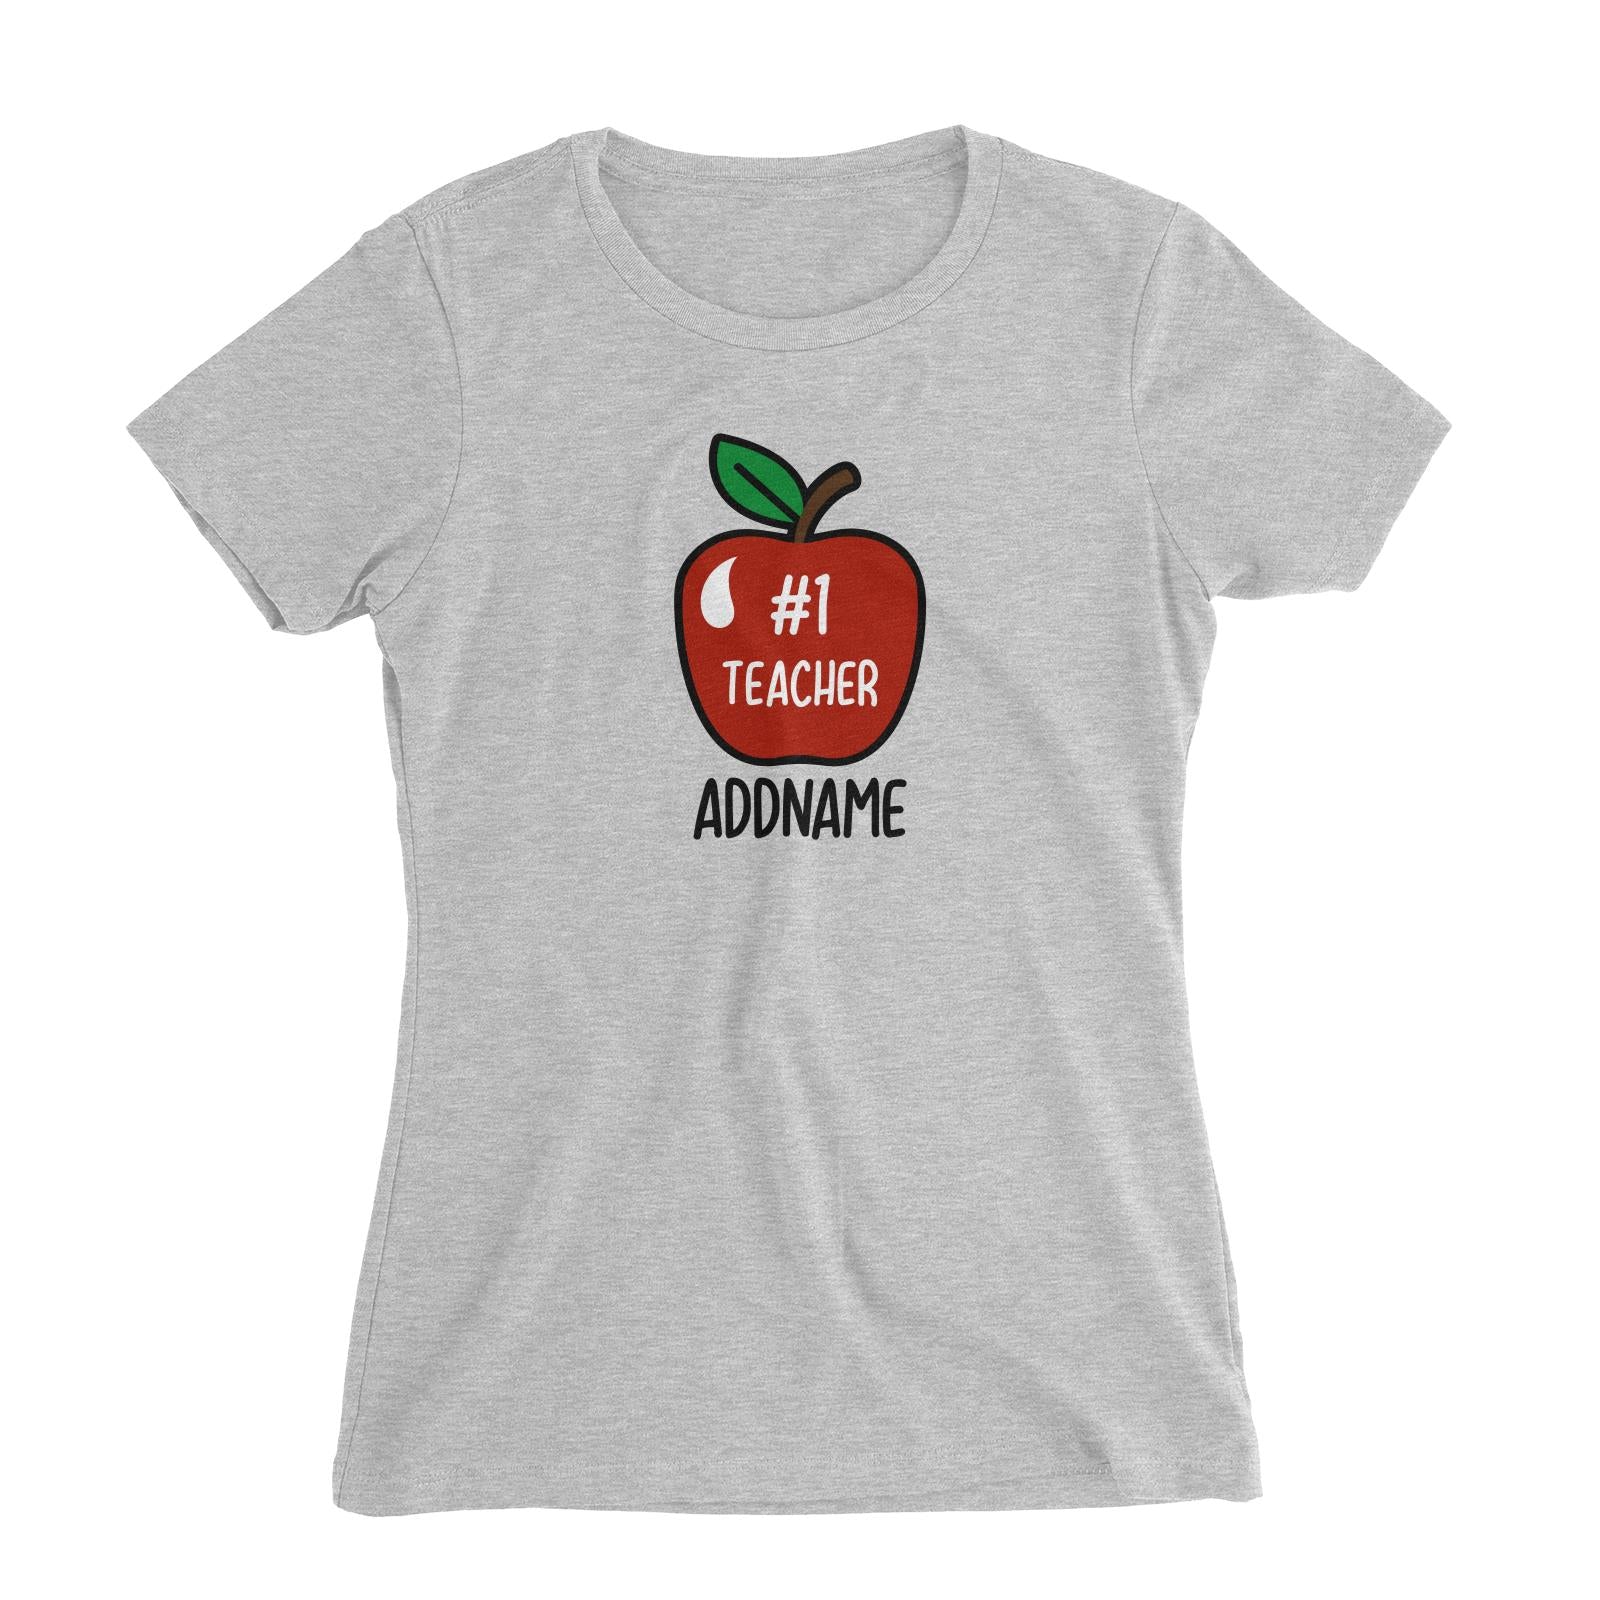 Teacher Addname Big Red Apple Hashtag 1 Teacher Addname Women's Slim Fit T-Shirt